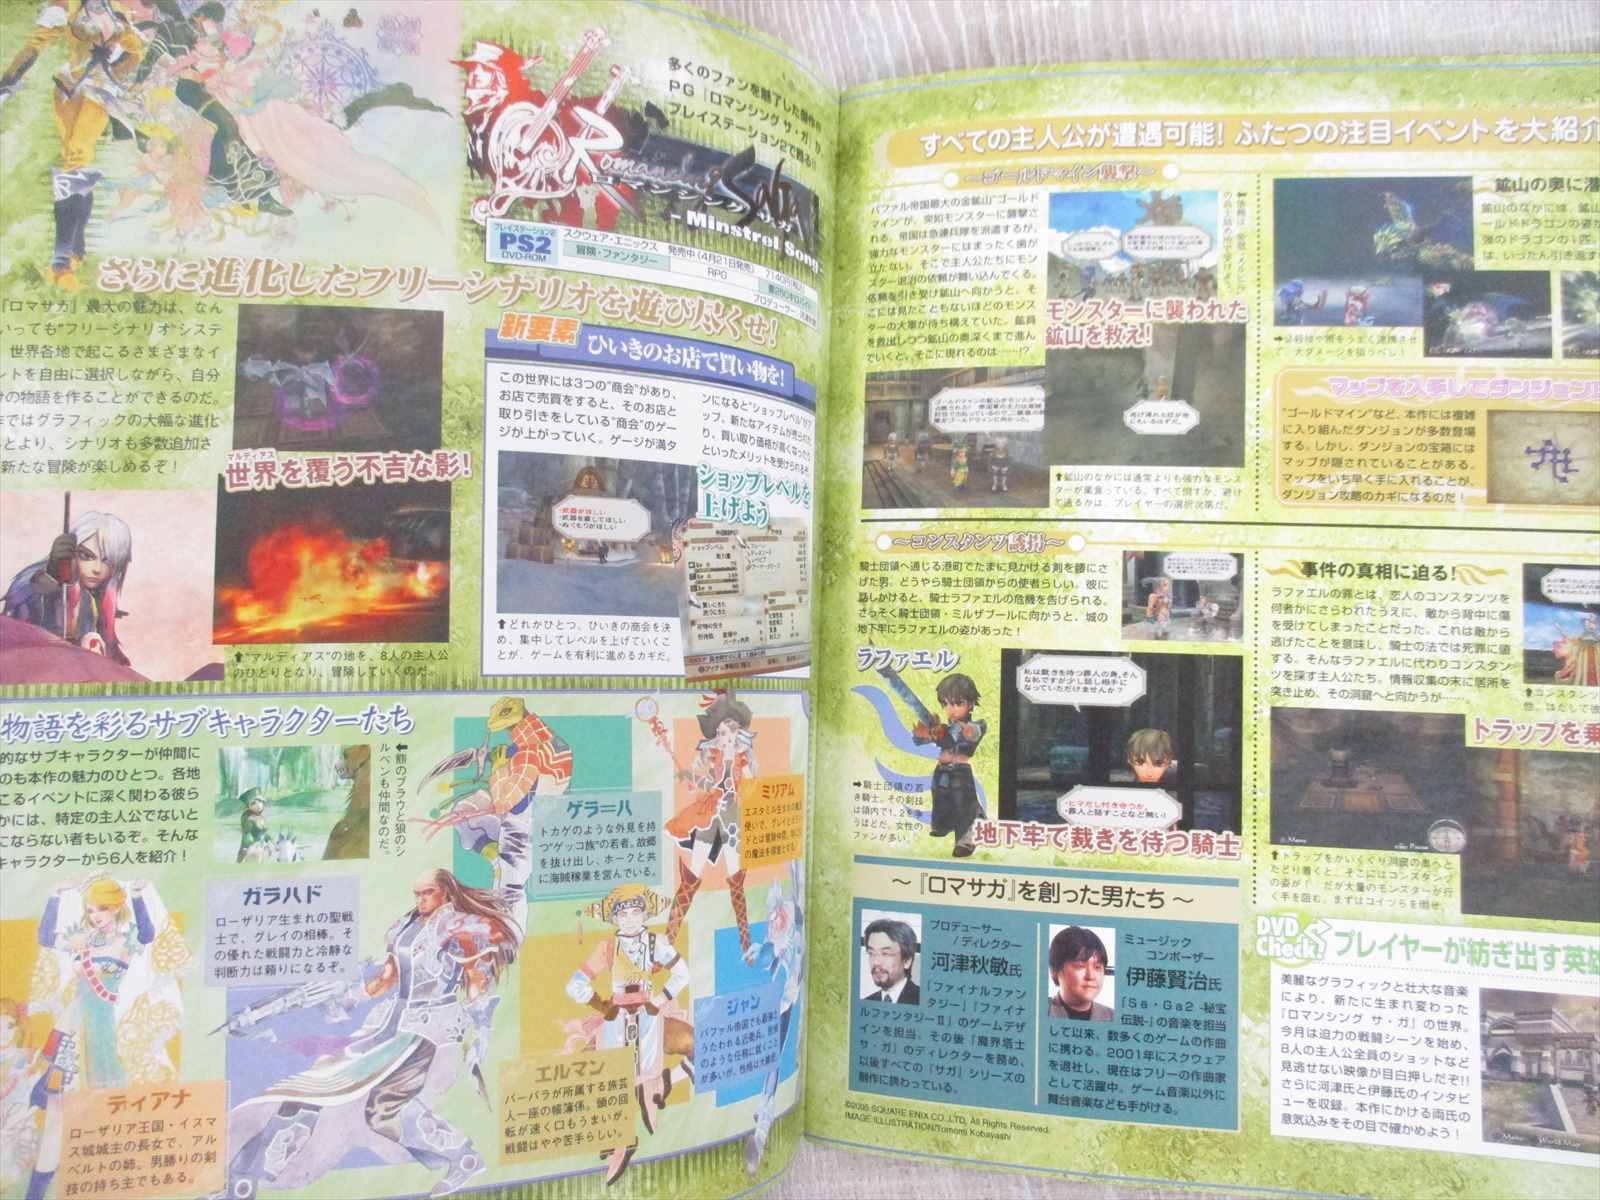 Famitsu Wave Dvd 6 05 W Dvd Game Guide Art Book Romancing Saga Dmc3 Eb Ebay